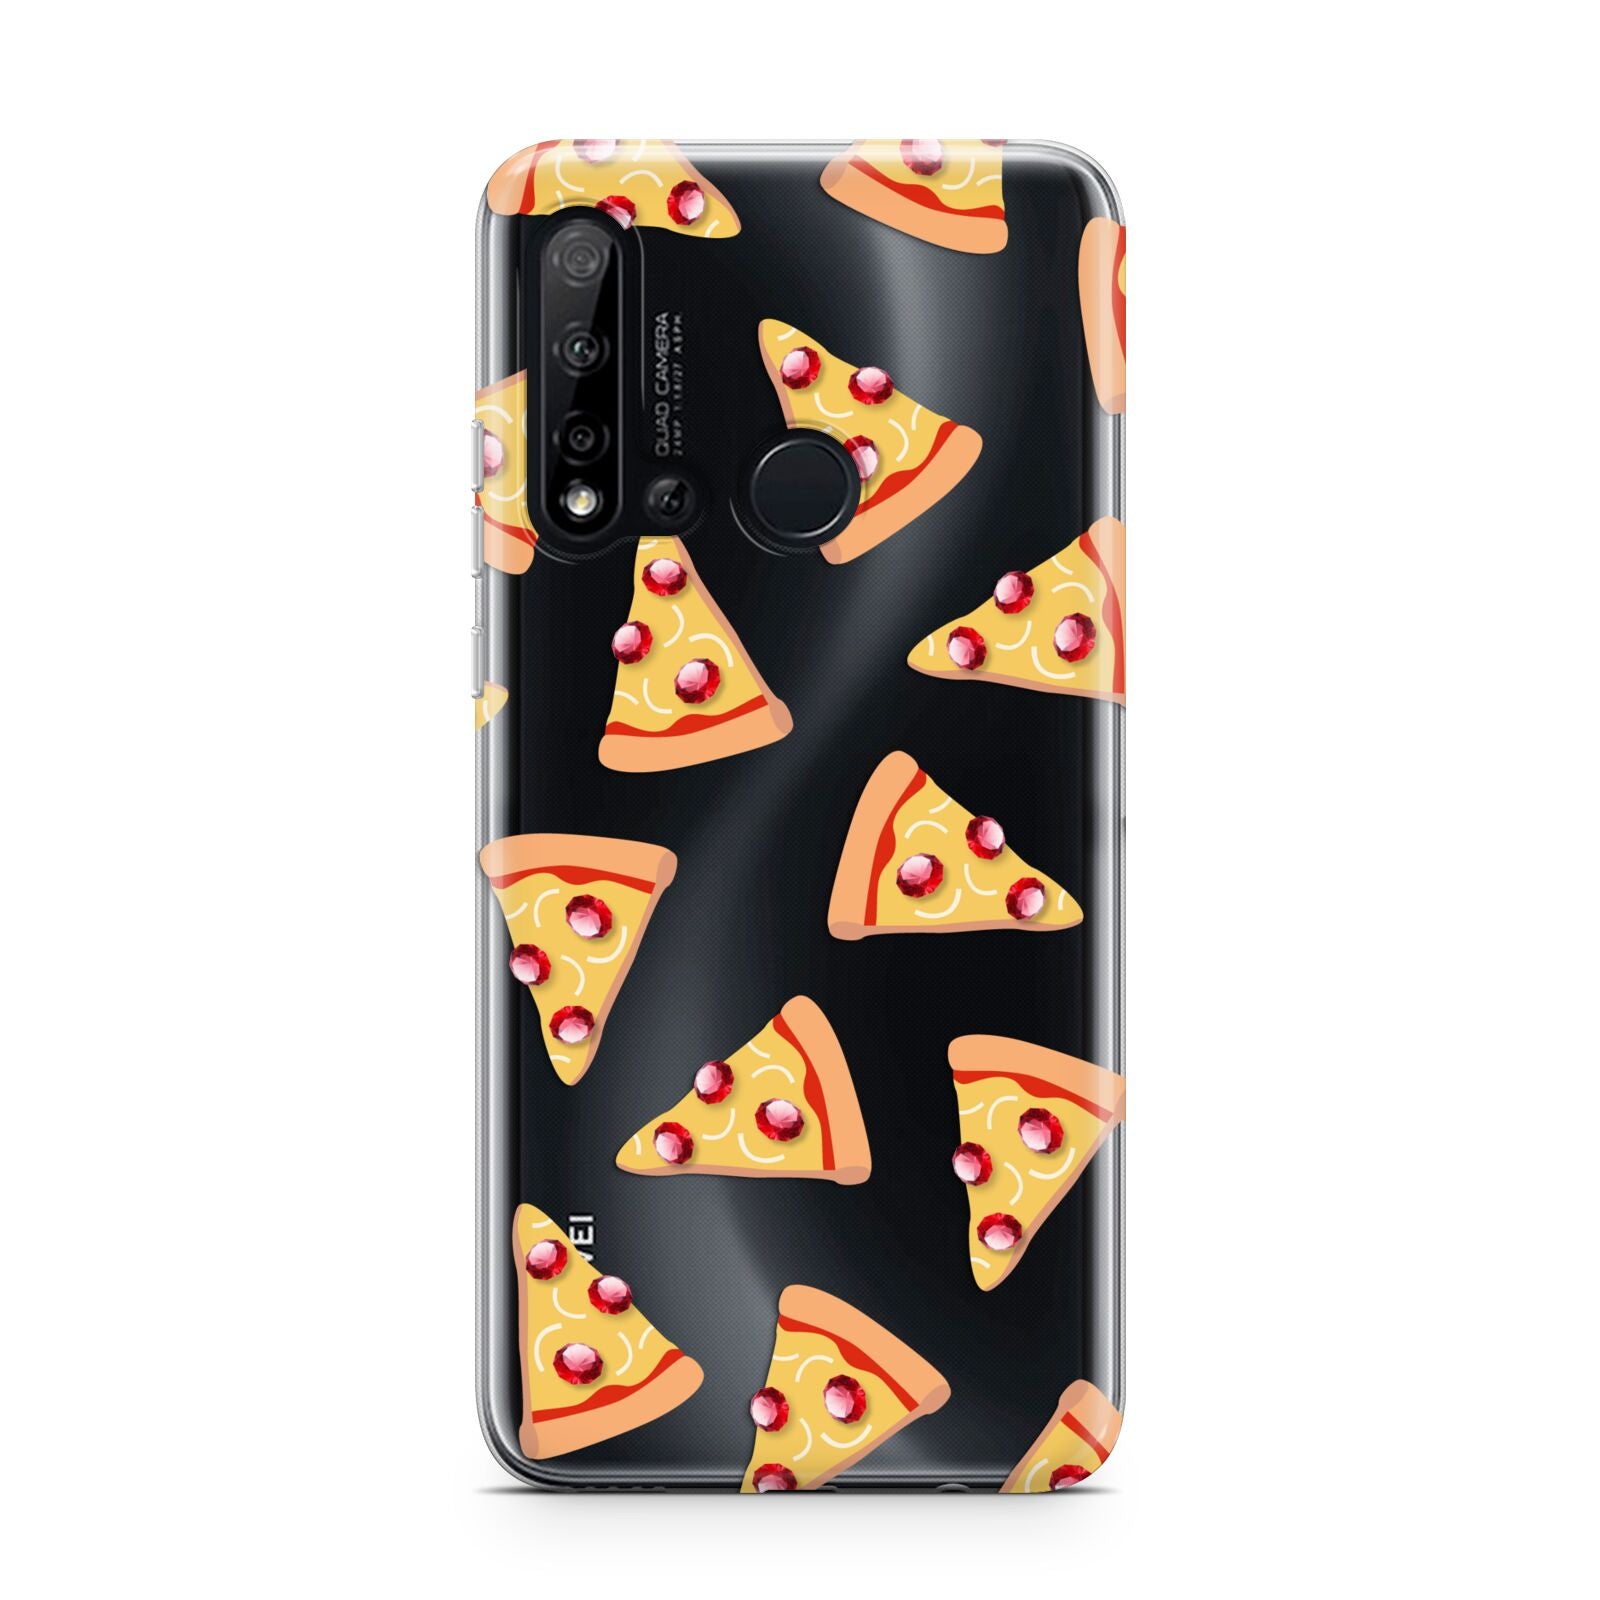 Rubies on Cartoon Pizza Slices Huawei P20 Lite 5G Phone Case